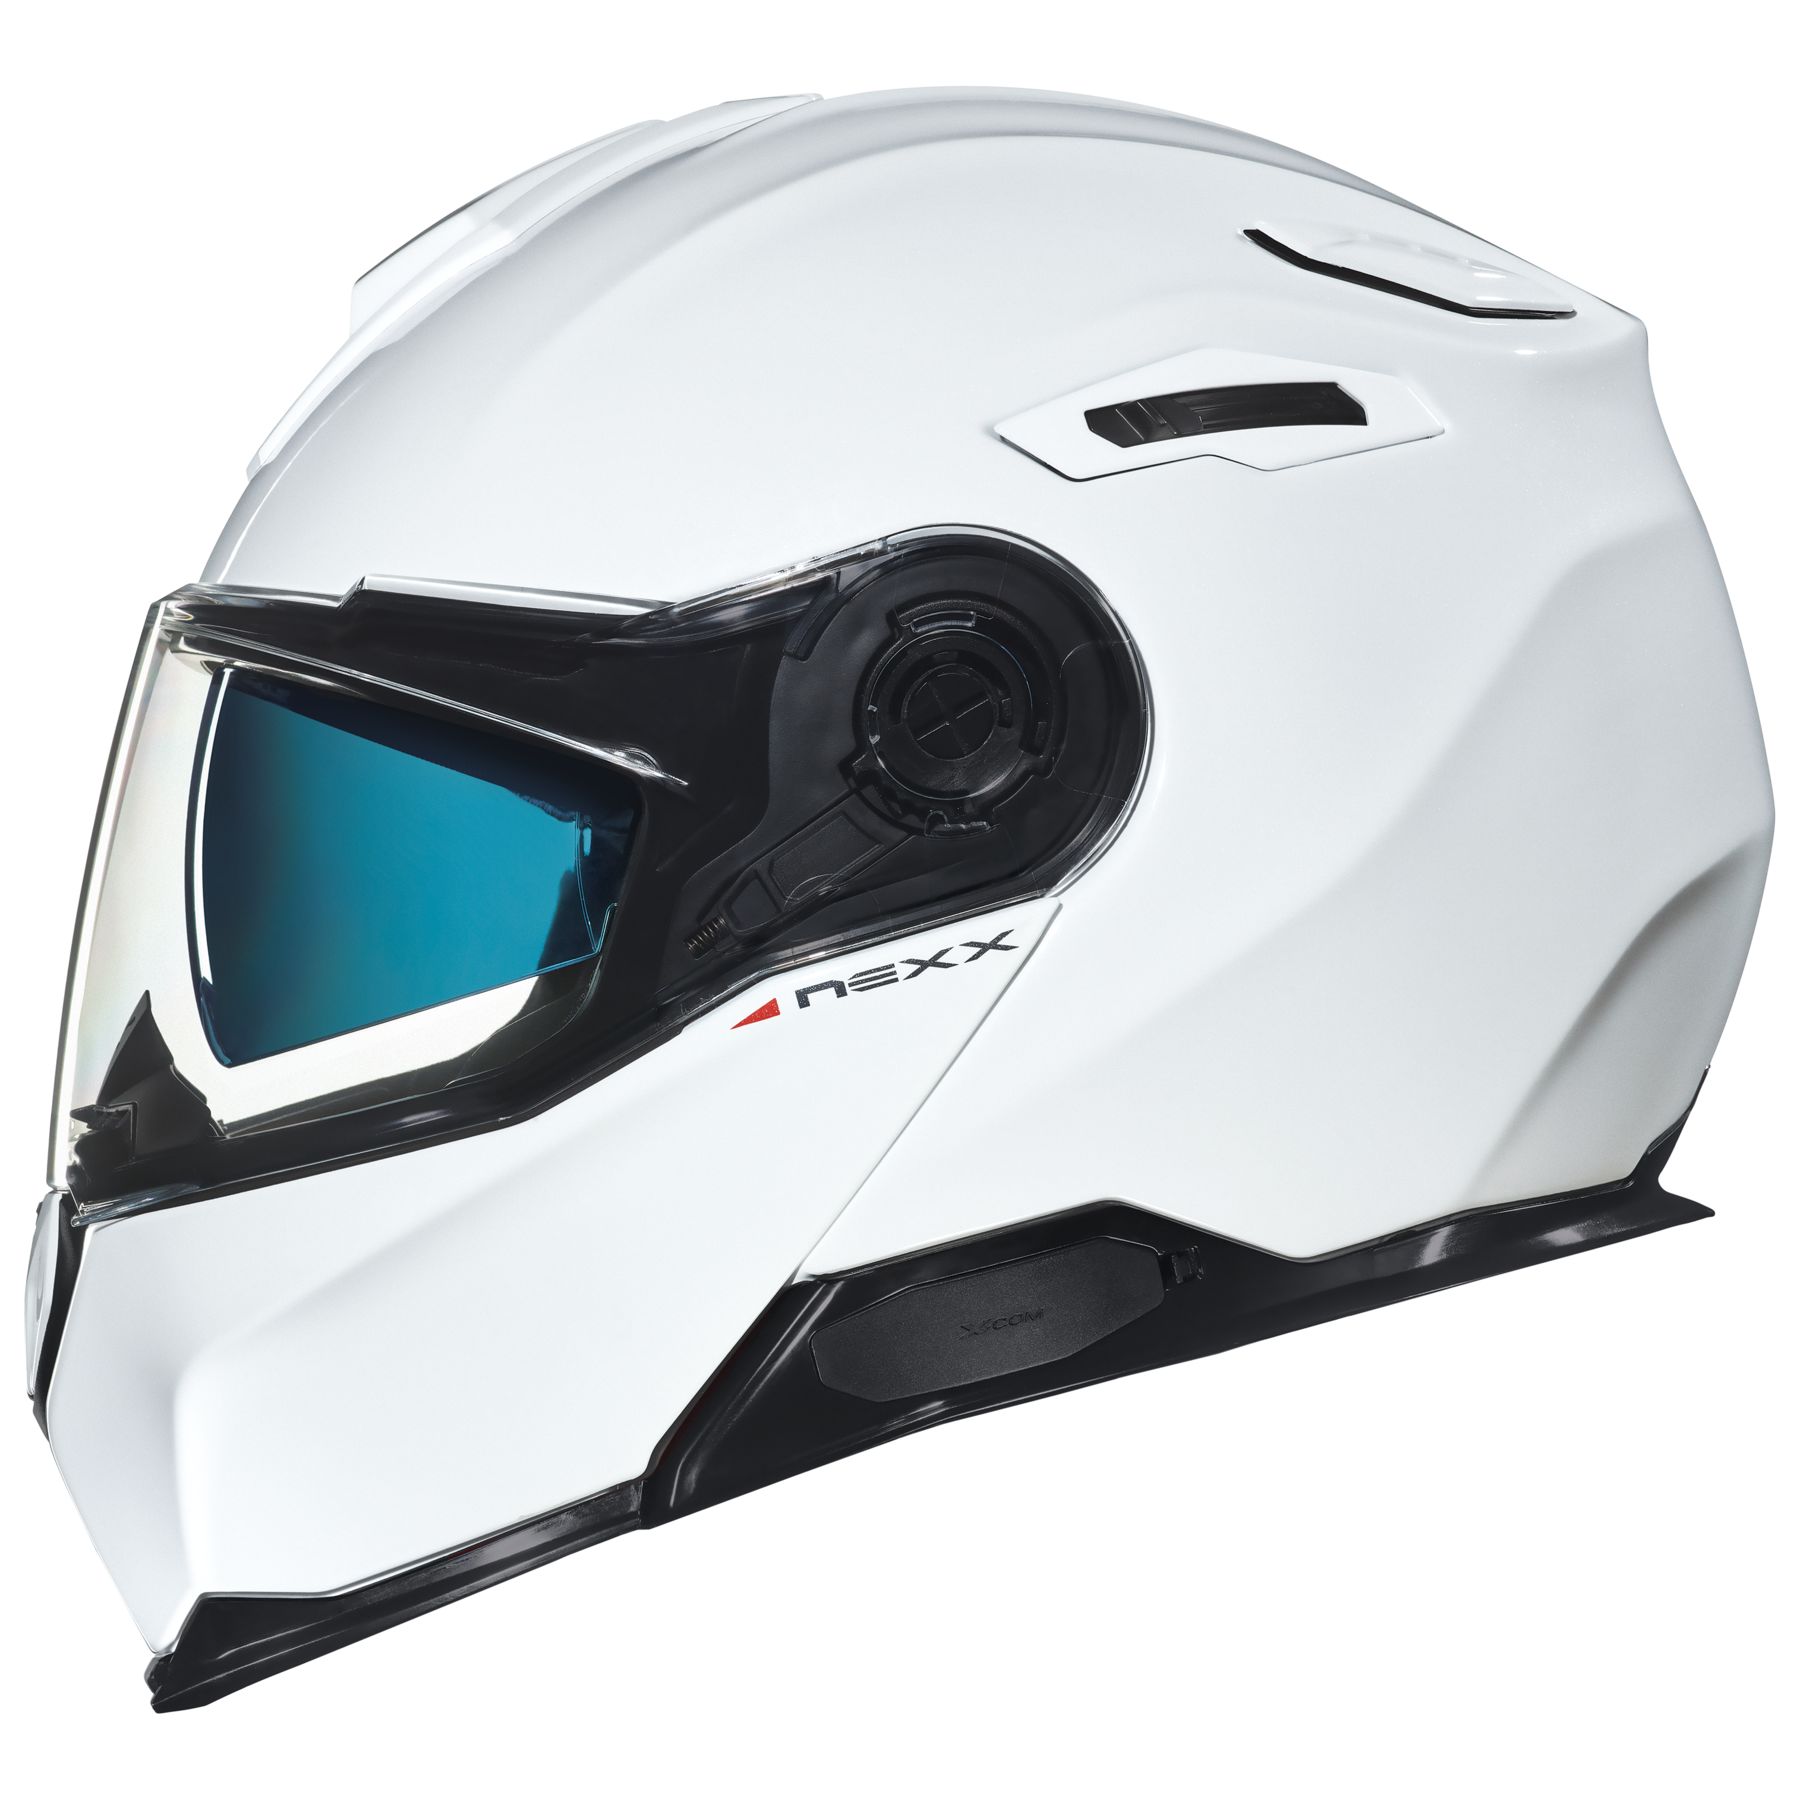 Nexx X-Vilitur Helmet